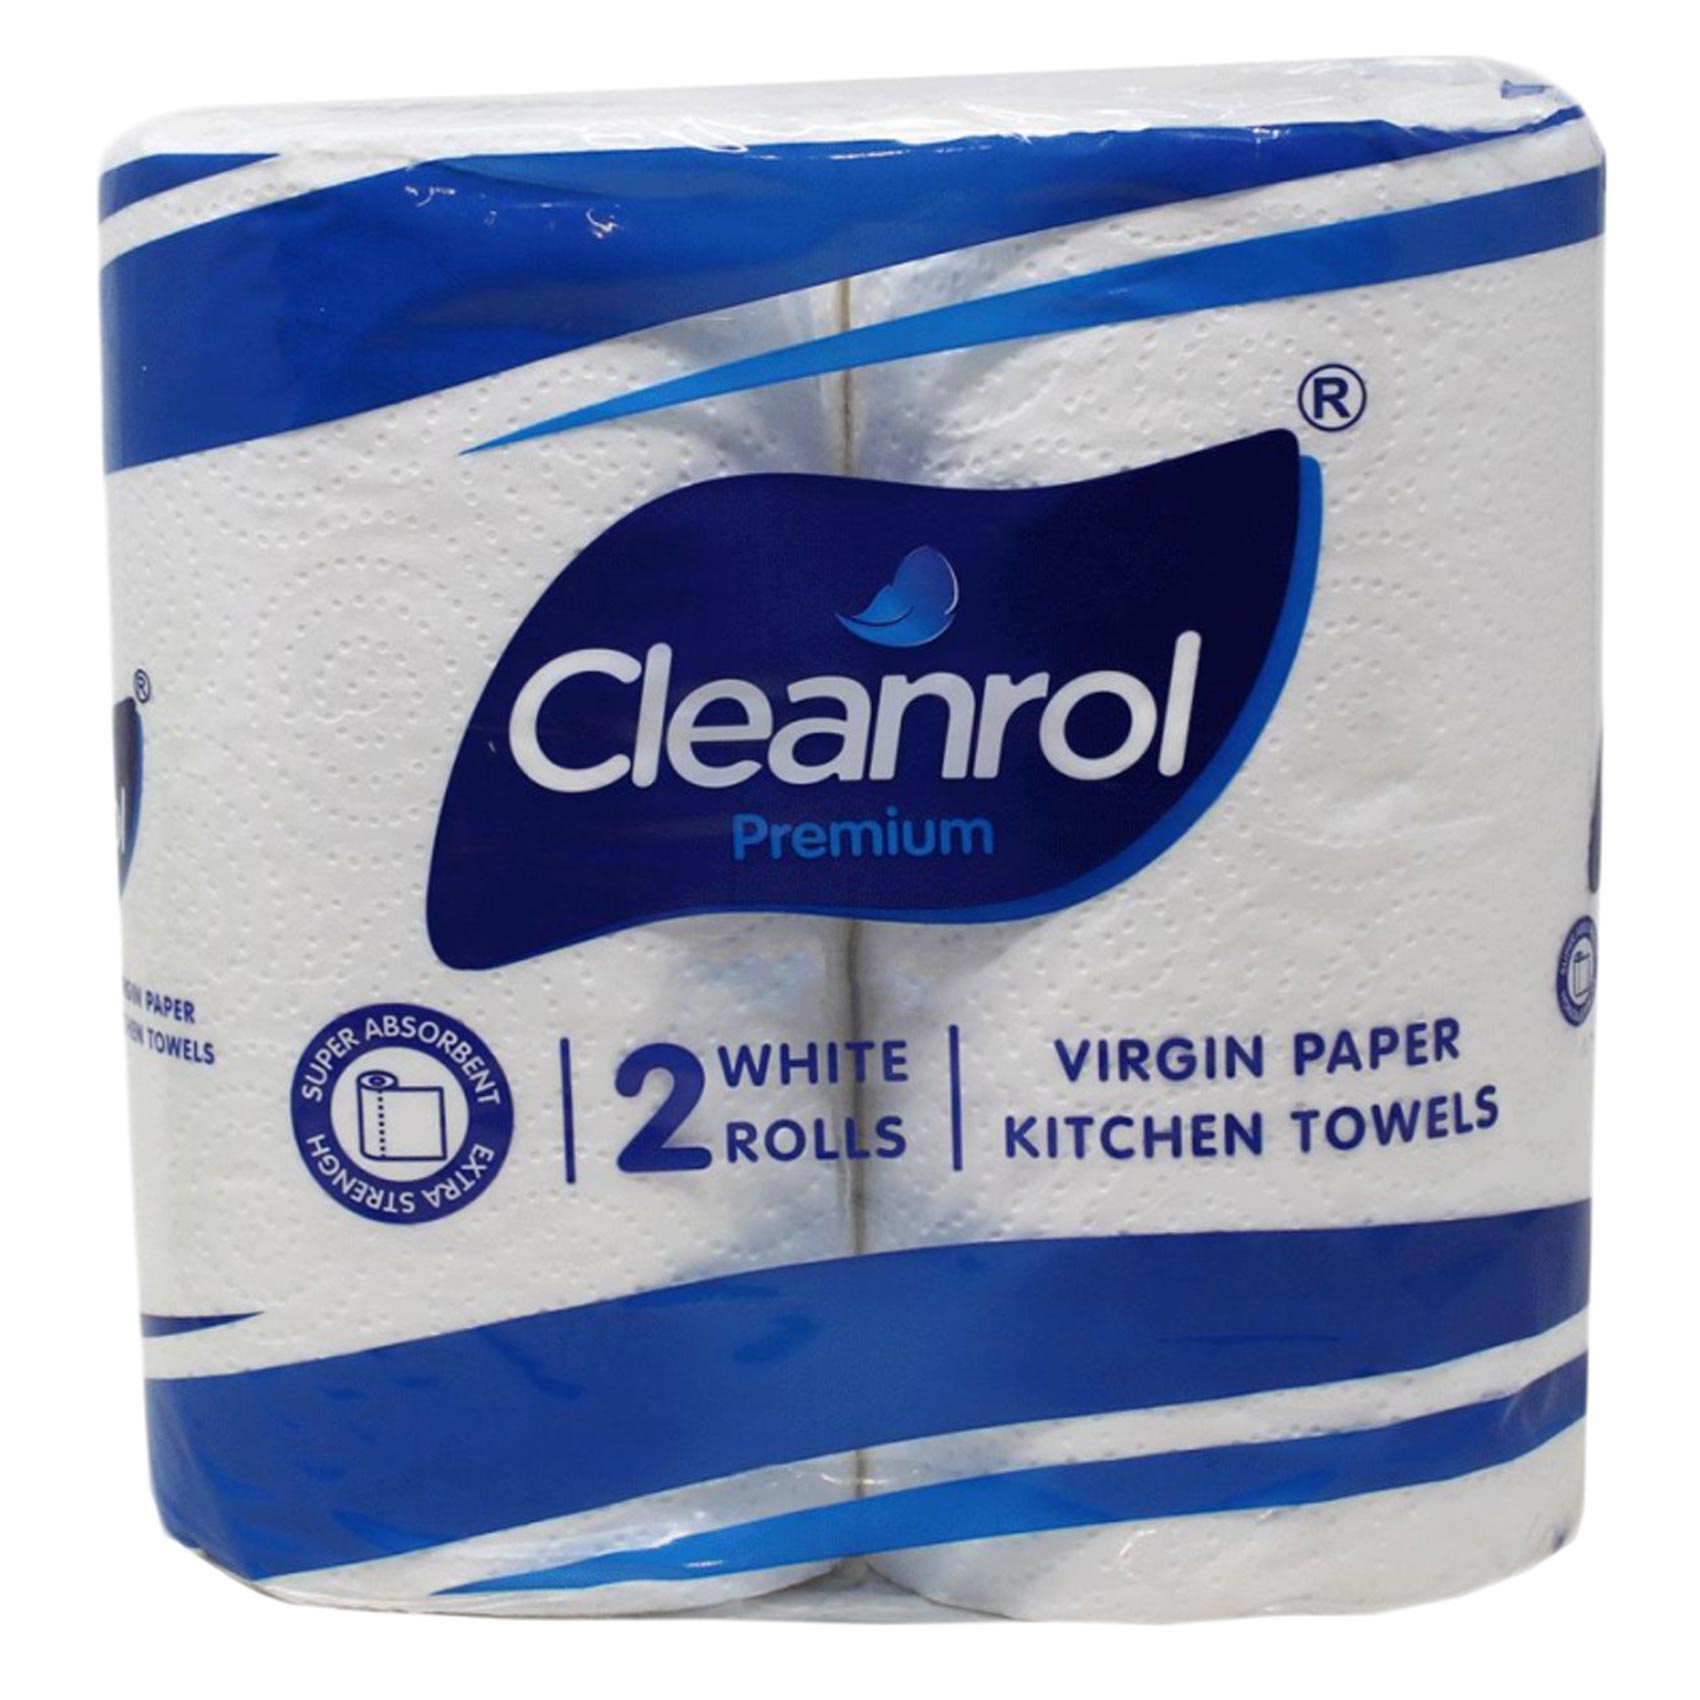 Cleanrol Premium Virgin Paper Kitchen Towel 2 Count